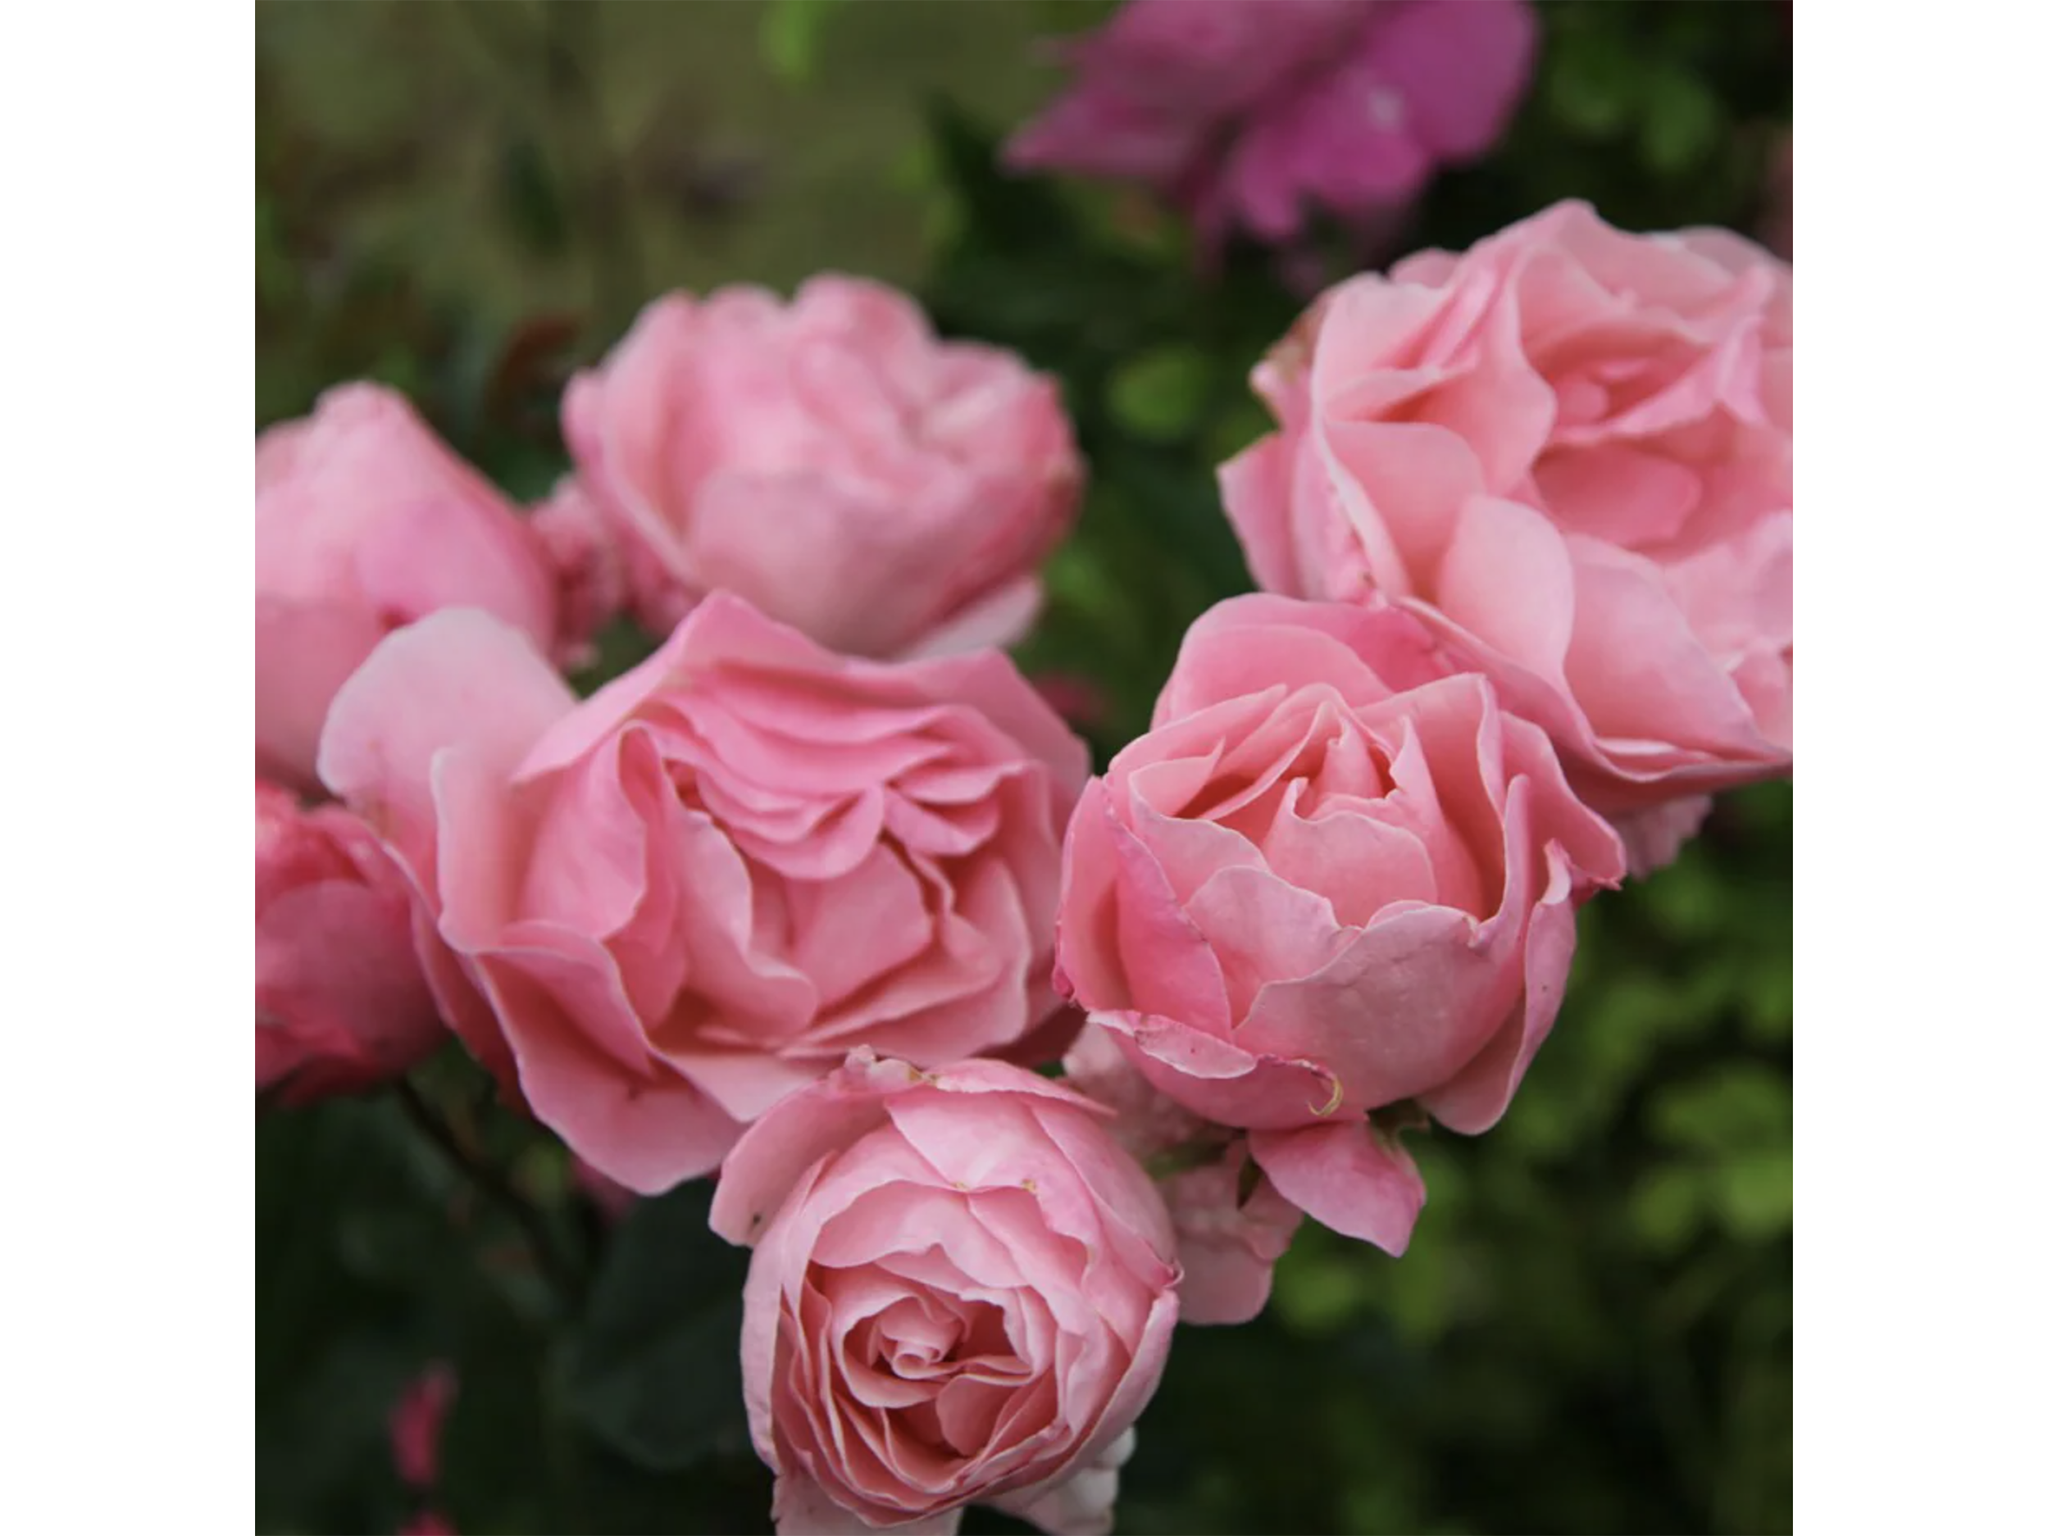 Flowers Named After Royals - Princess Diana Roses